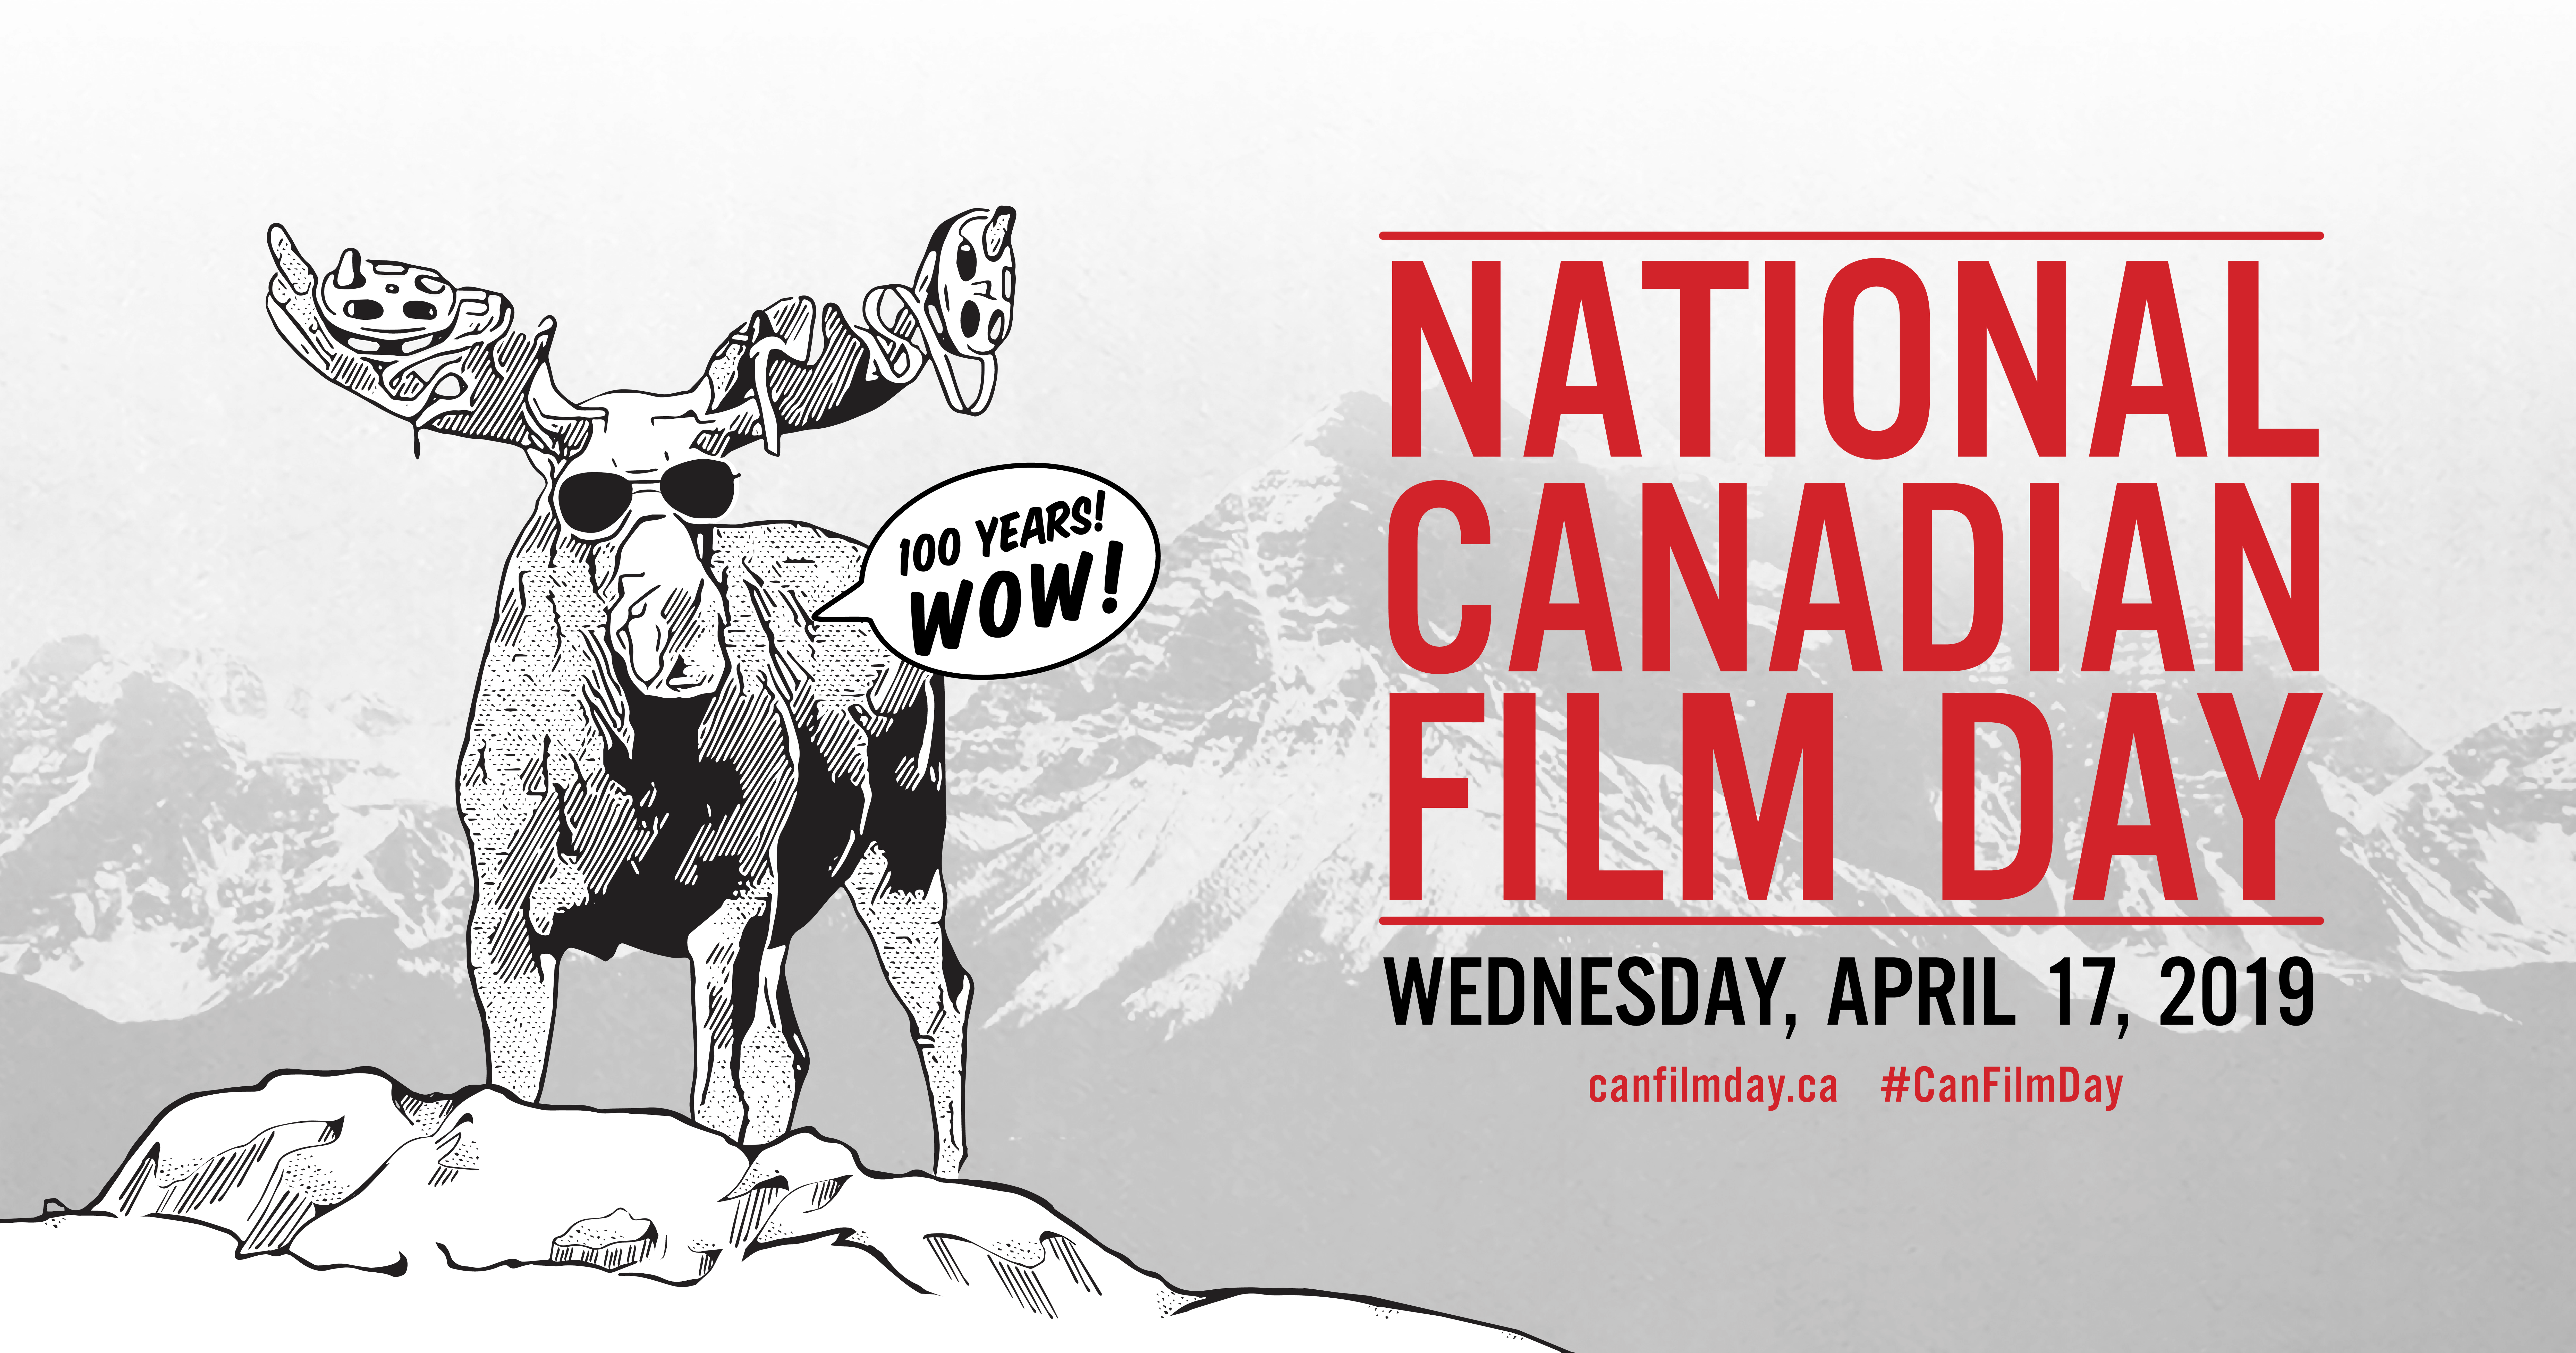 CELEBRATE 100 YEARS OF CANADIAN FILM WITH SUDBURY INDIE CINEMA!